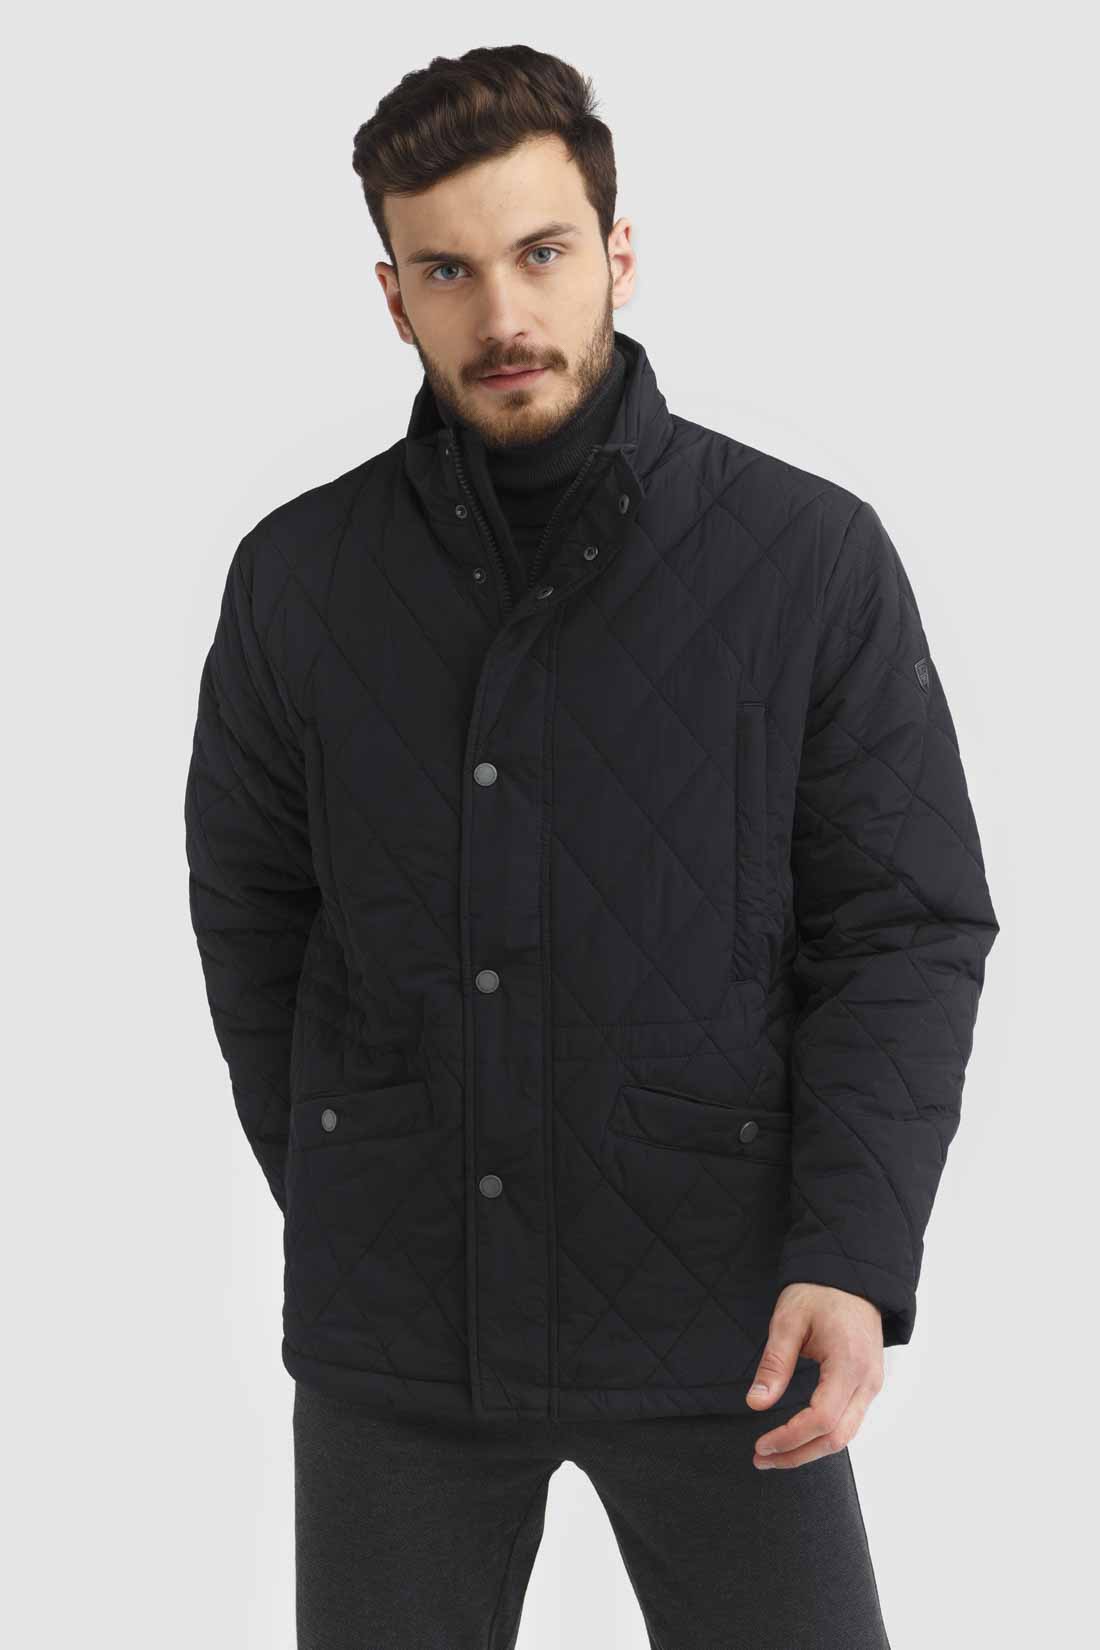 Куртка (арт. baon B530502), размер M, цвет черный Куртка (арт. baon B530502) - фото 1